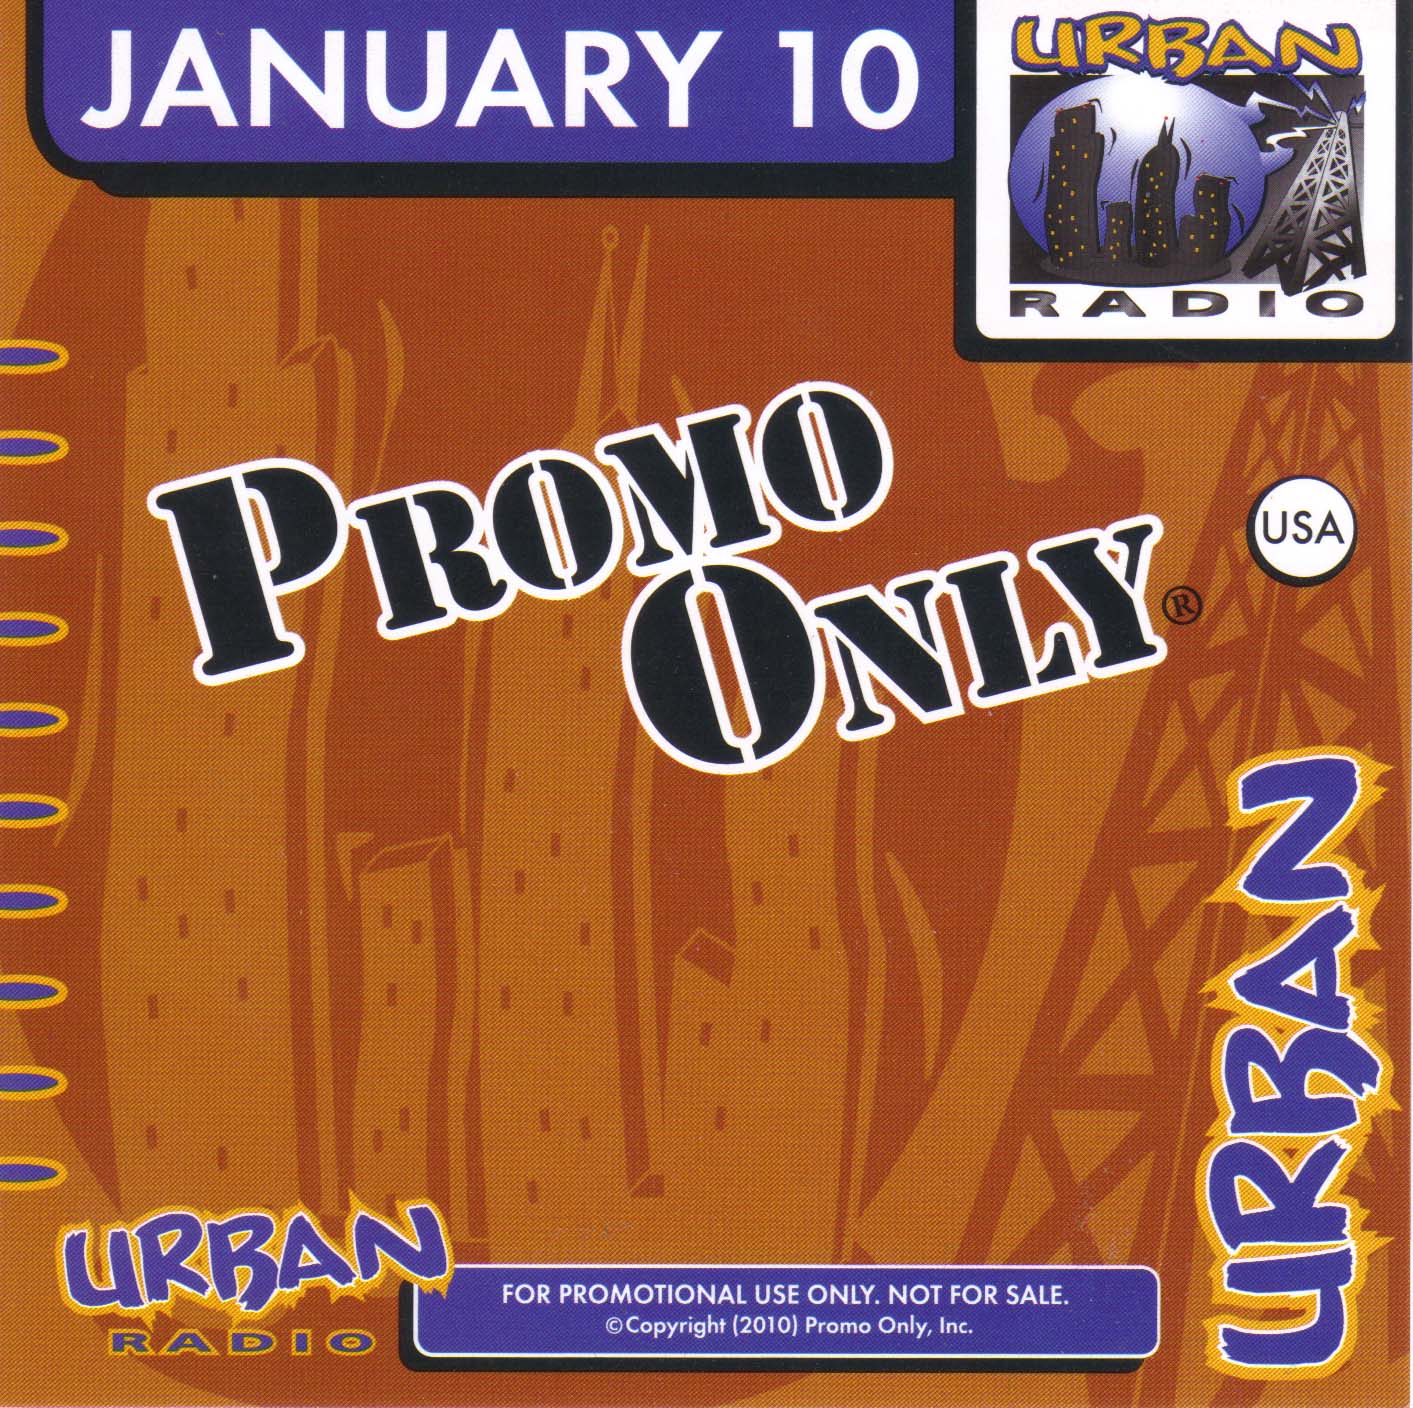 http://4.bp.blogspot.com/_4k8g0Hay7SY/SyuFjXN1HWI/AAAAAAAAAFo/JahKARSUFSw/s1600/00-va-promo_only_urban_radio_january-2010-front.jpg